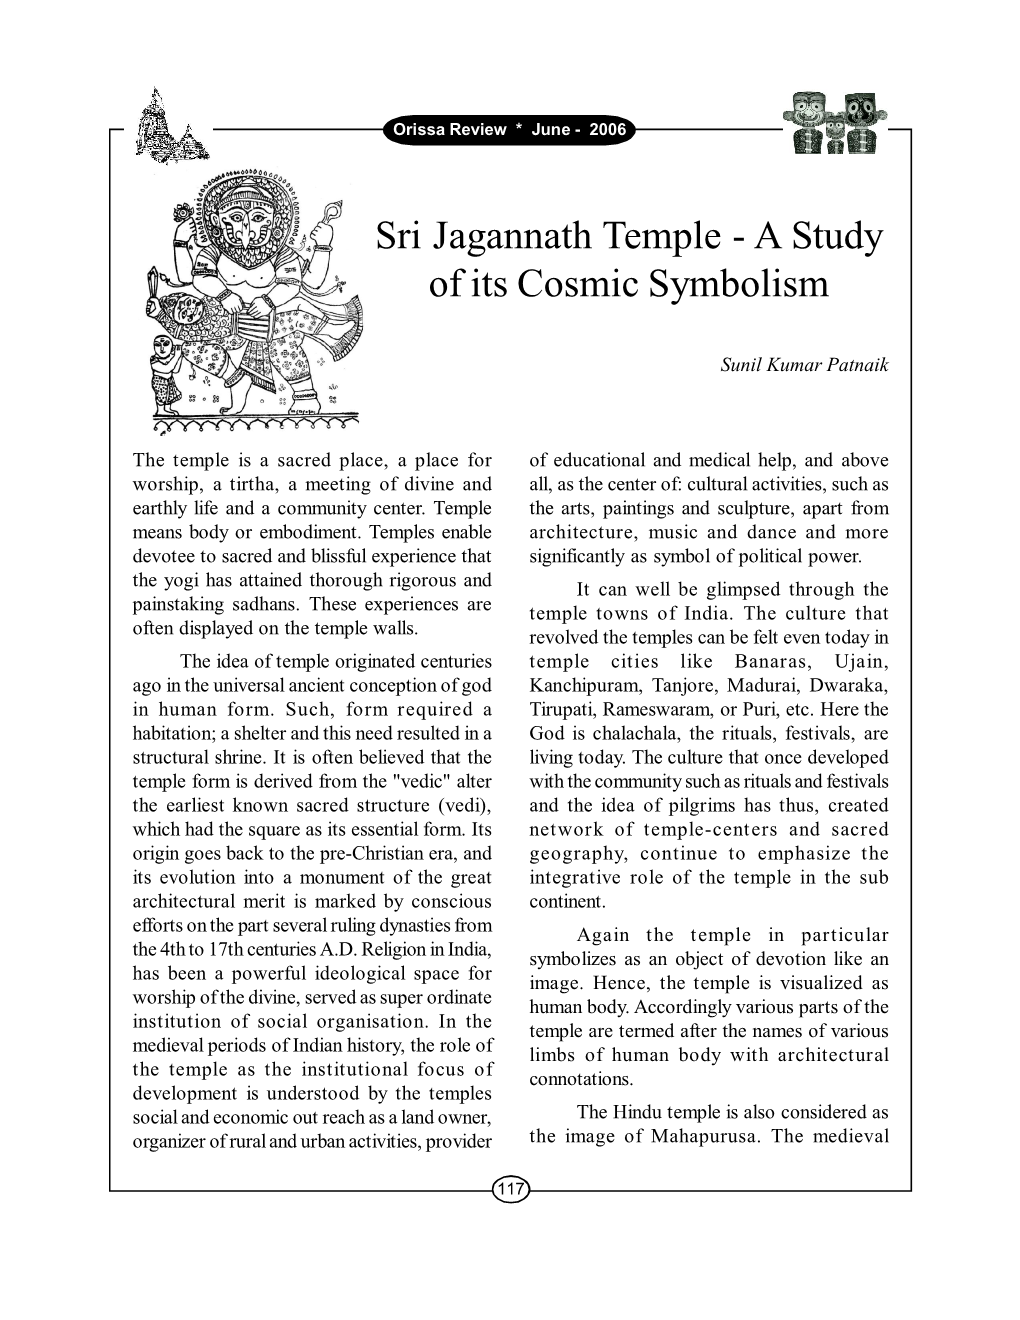 Sri Jagannath Temple - a Study of Its Cosmic Symbolism